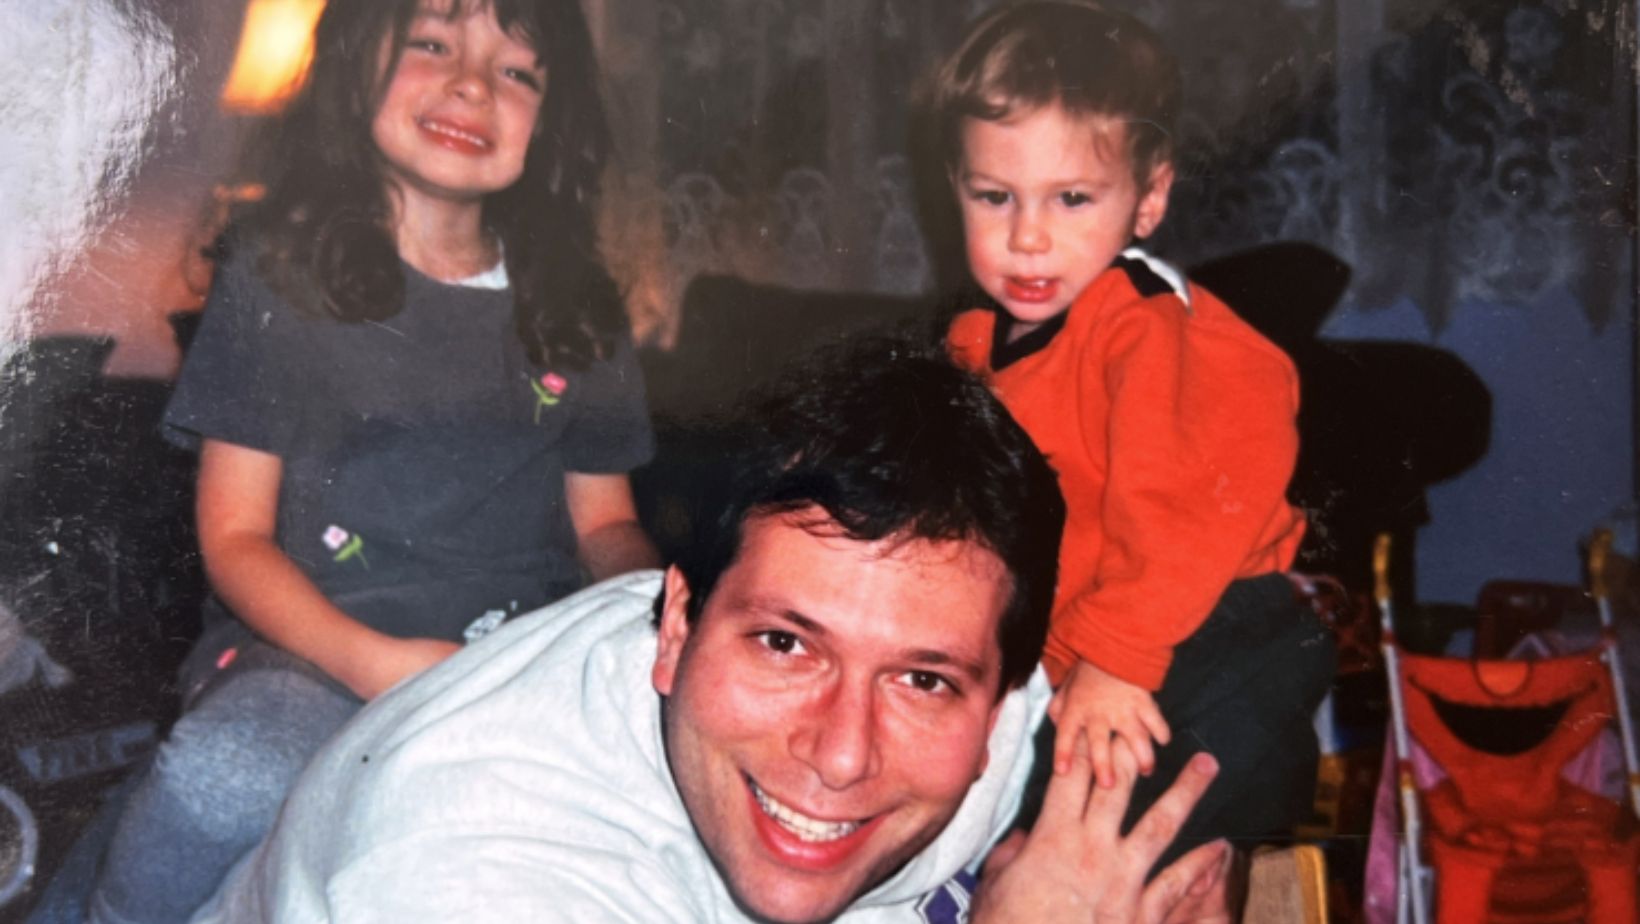 Mark Brisman with his two small children